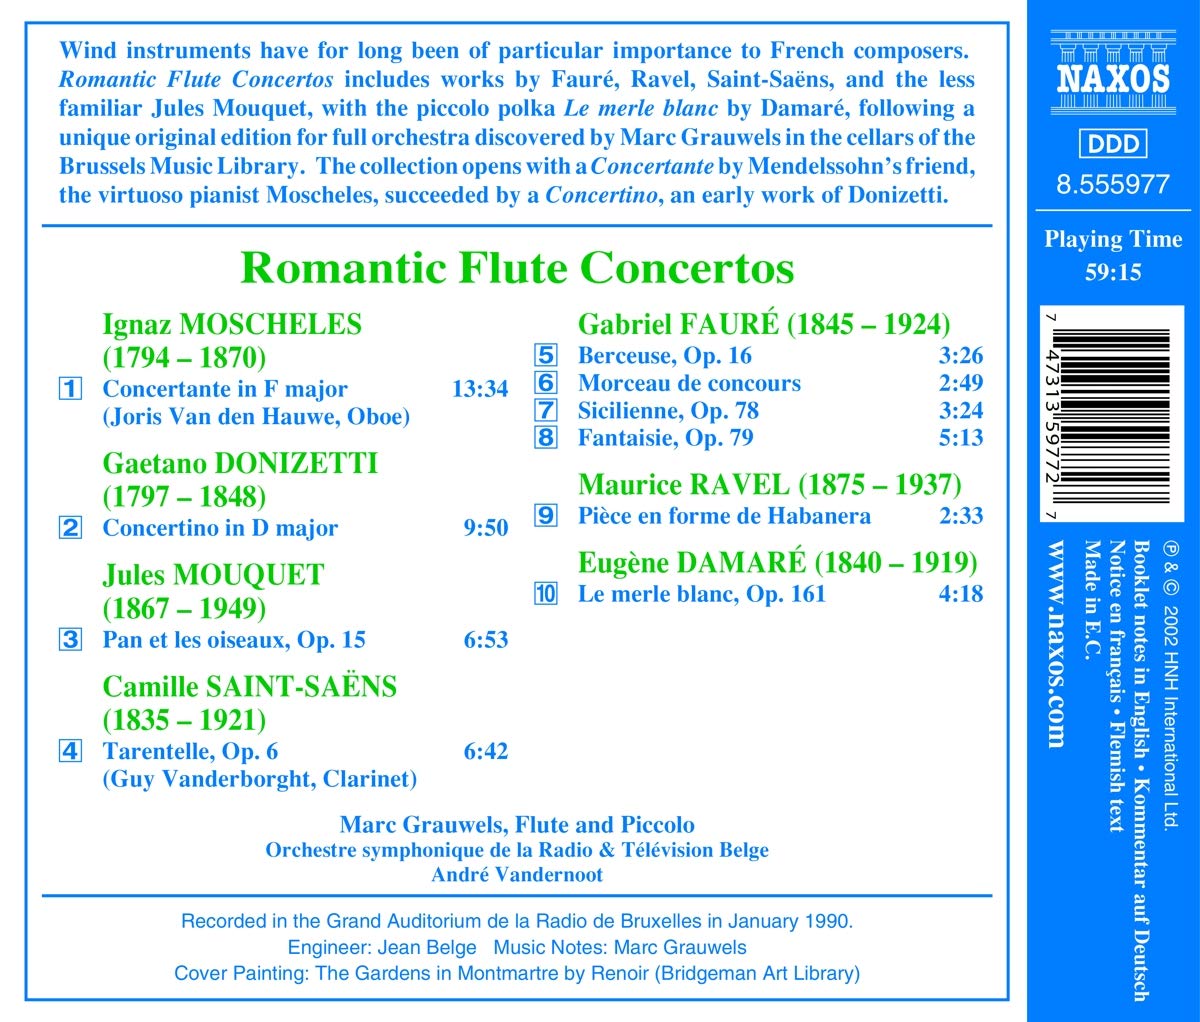 Marc Grauwels 로맨틱 플루트 협주곡 모음 (Romantic Flute Concerto) 